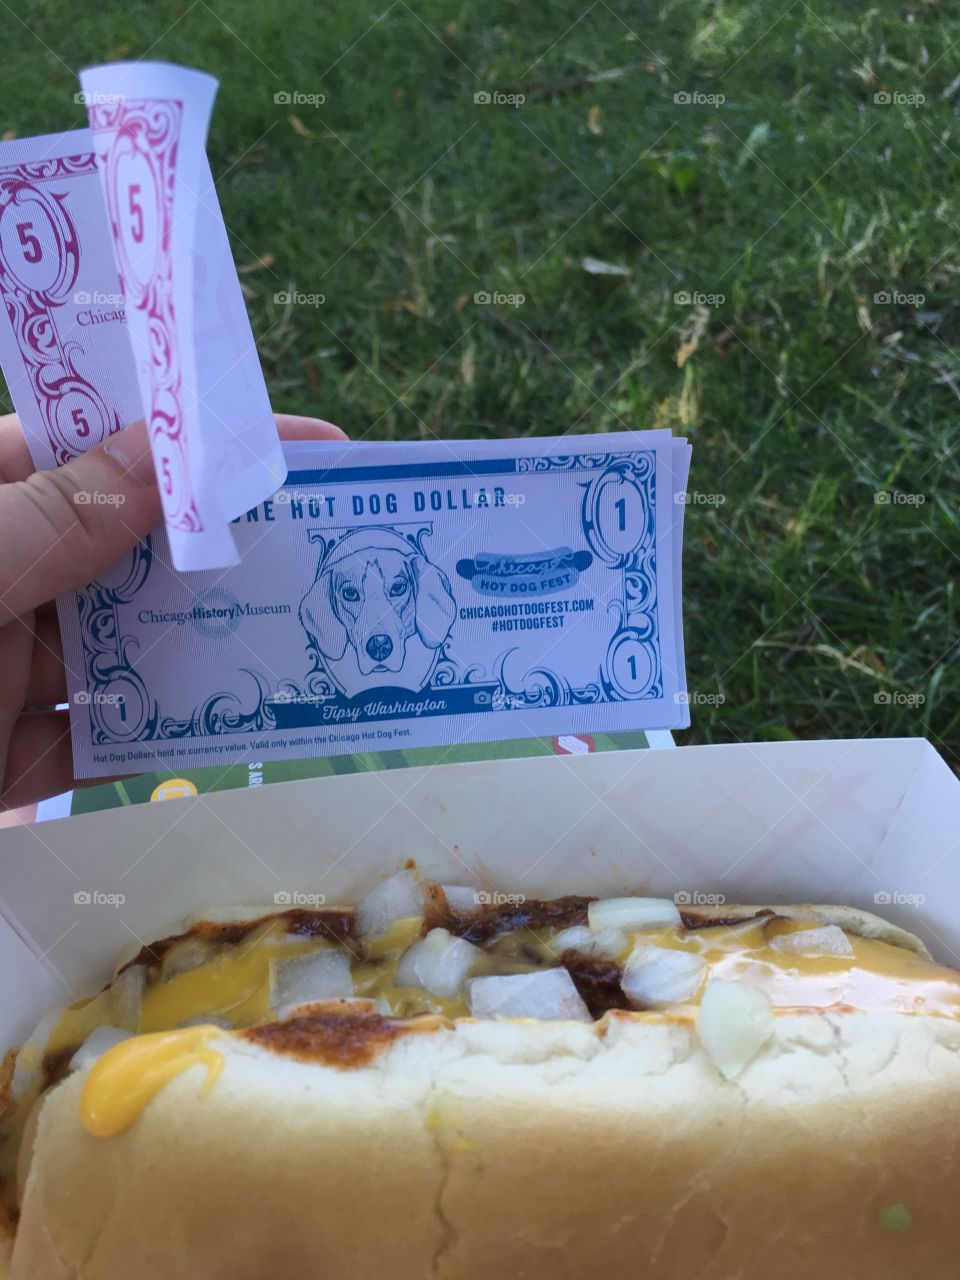 Hot dog dollars